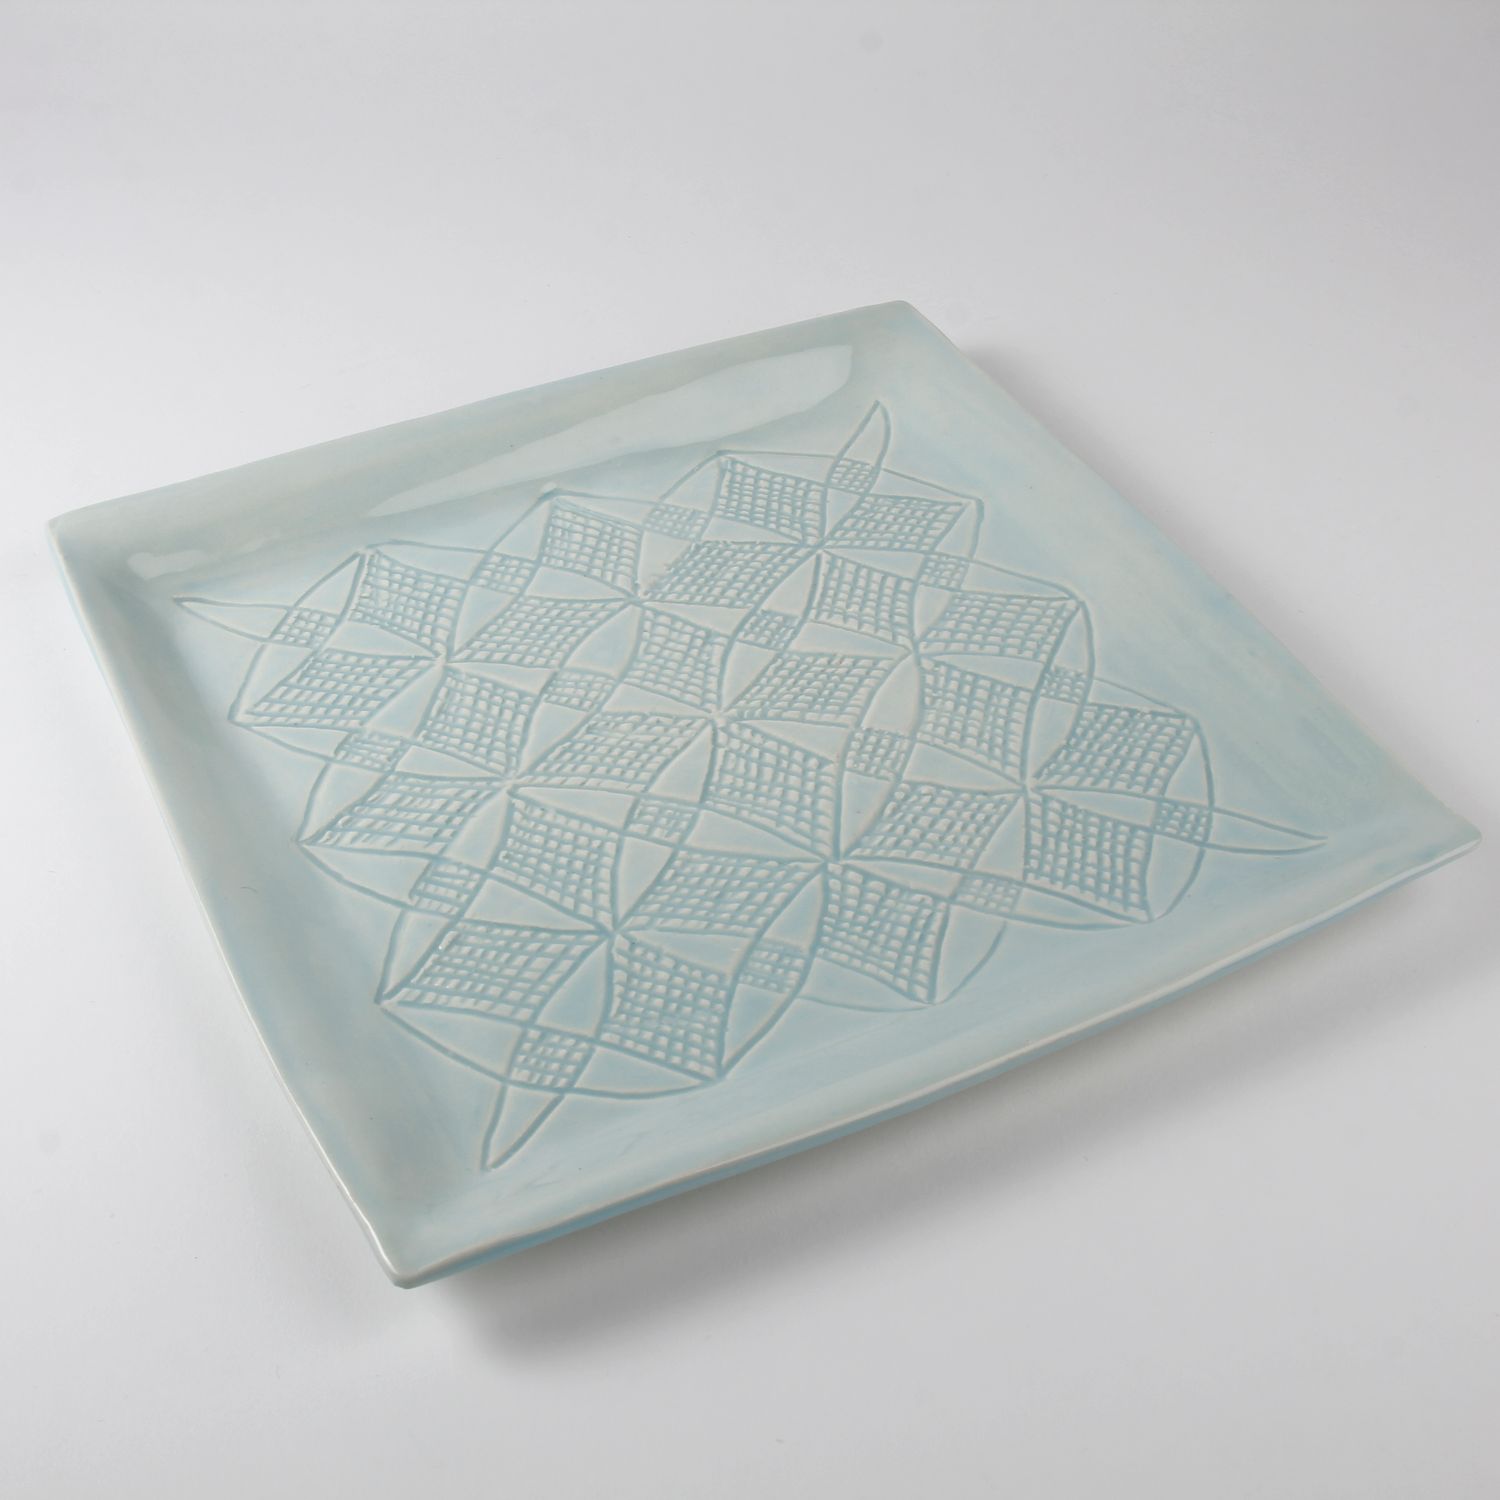 Arlene Kushnir: Large Carved Square Plate – Celadon Product Image 1 of 3